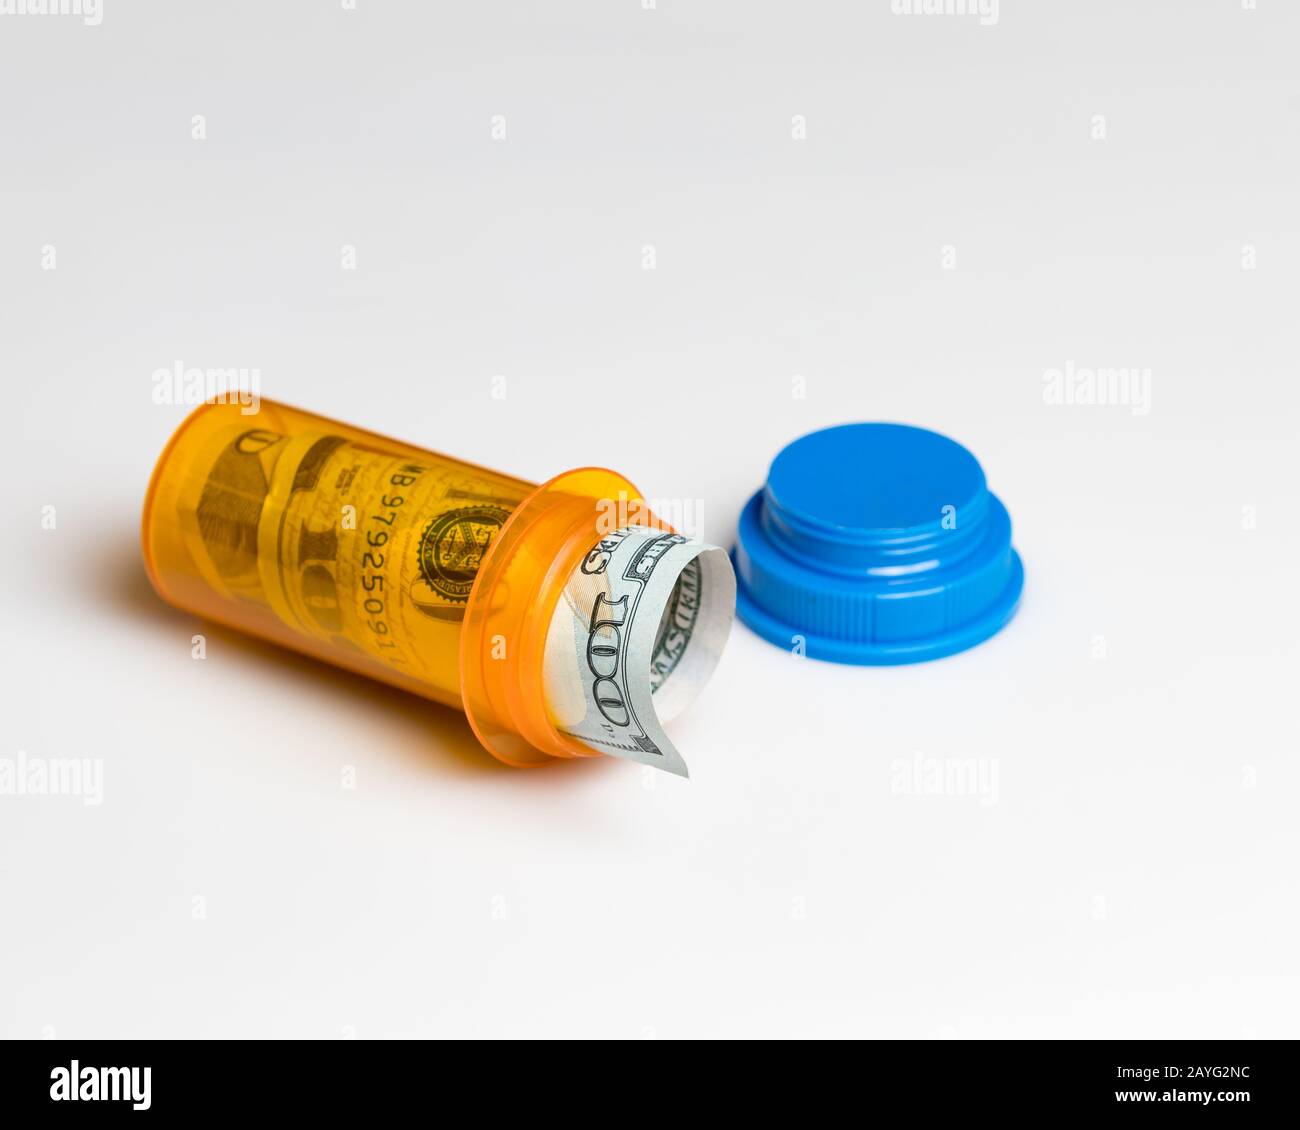 Prescription drug medicine pill bottle with 100 dollar bill inside. Concept of drug, health care, medical insurance cost Stock Photo